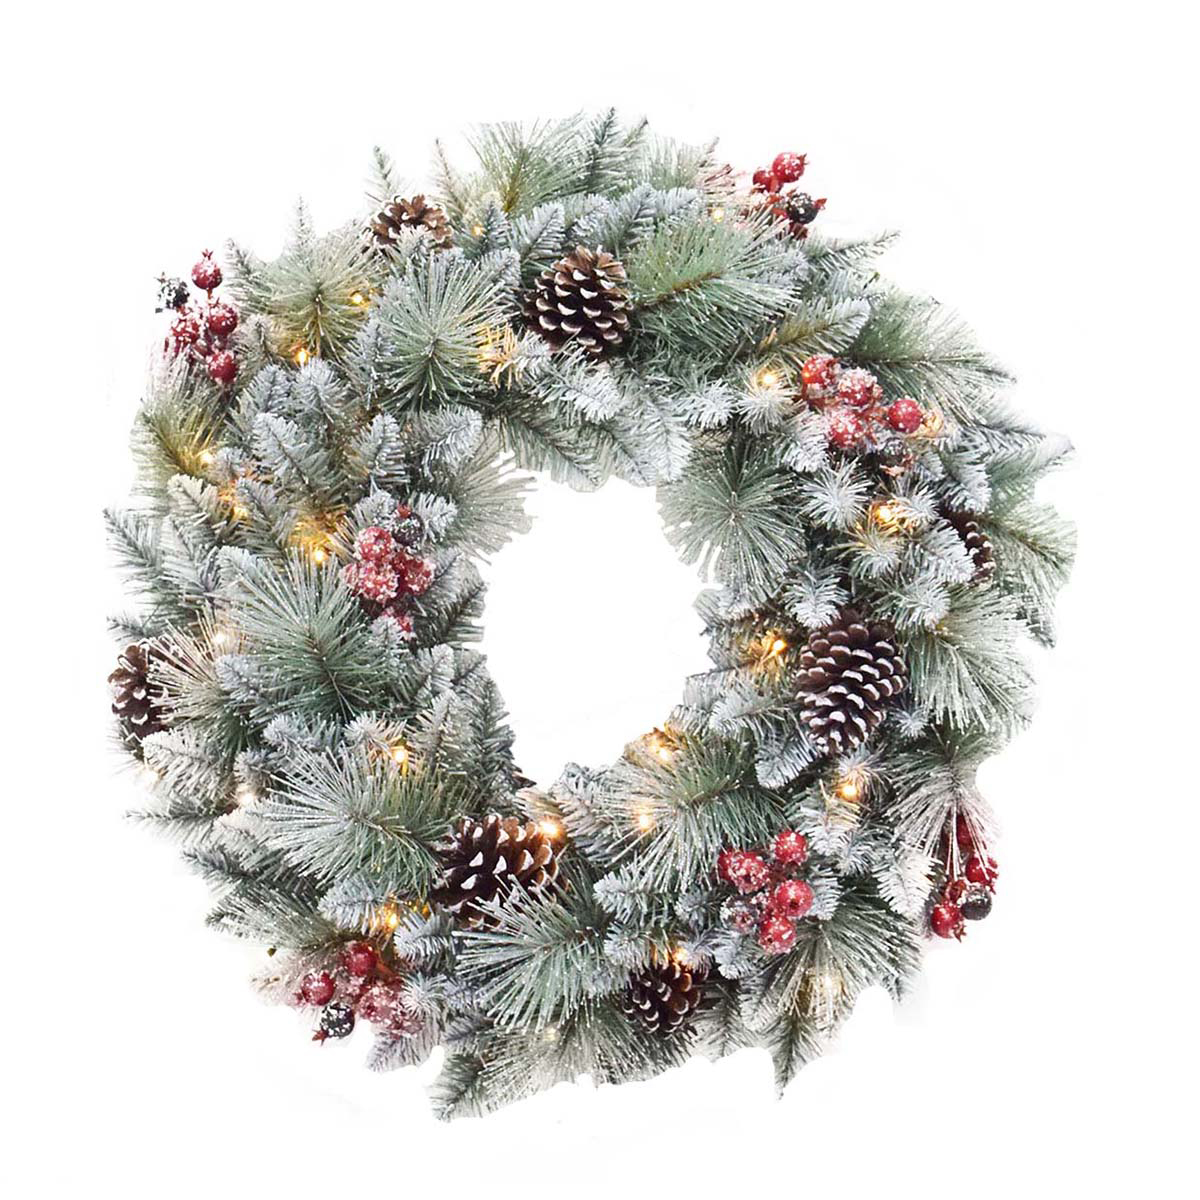 Santa's Workshop 30in. Glitter Mixed Pine Wreath